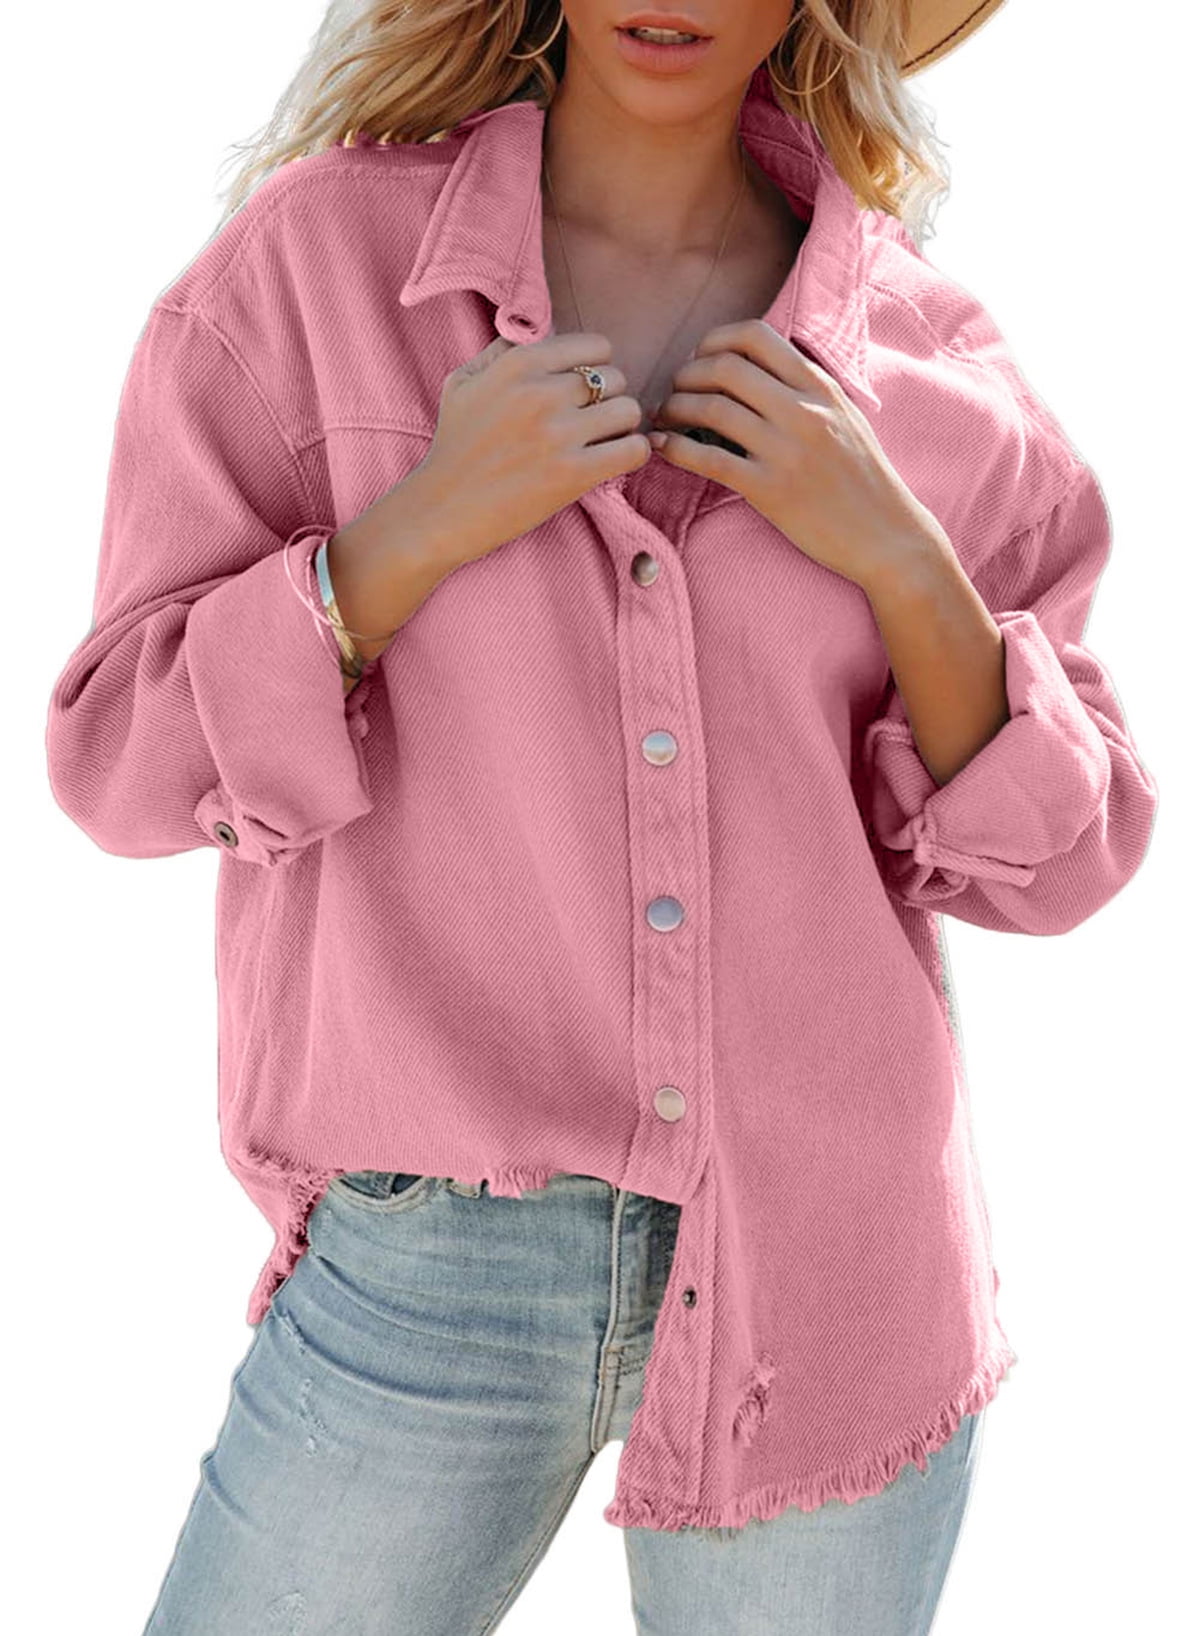 SHEWIN Womens Jean Jacket Oversized Denim Shirts Casual Long Sleeve ...